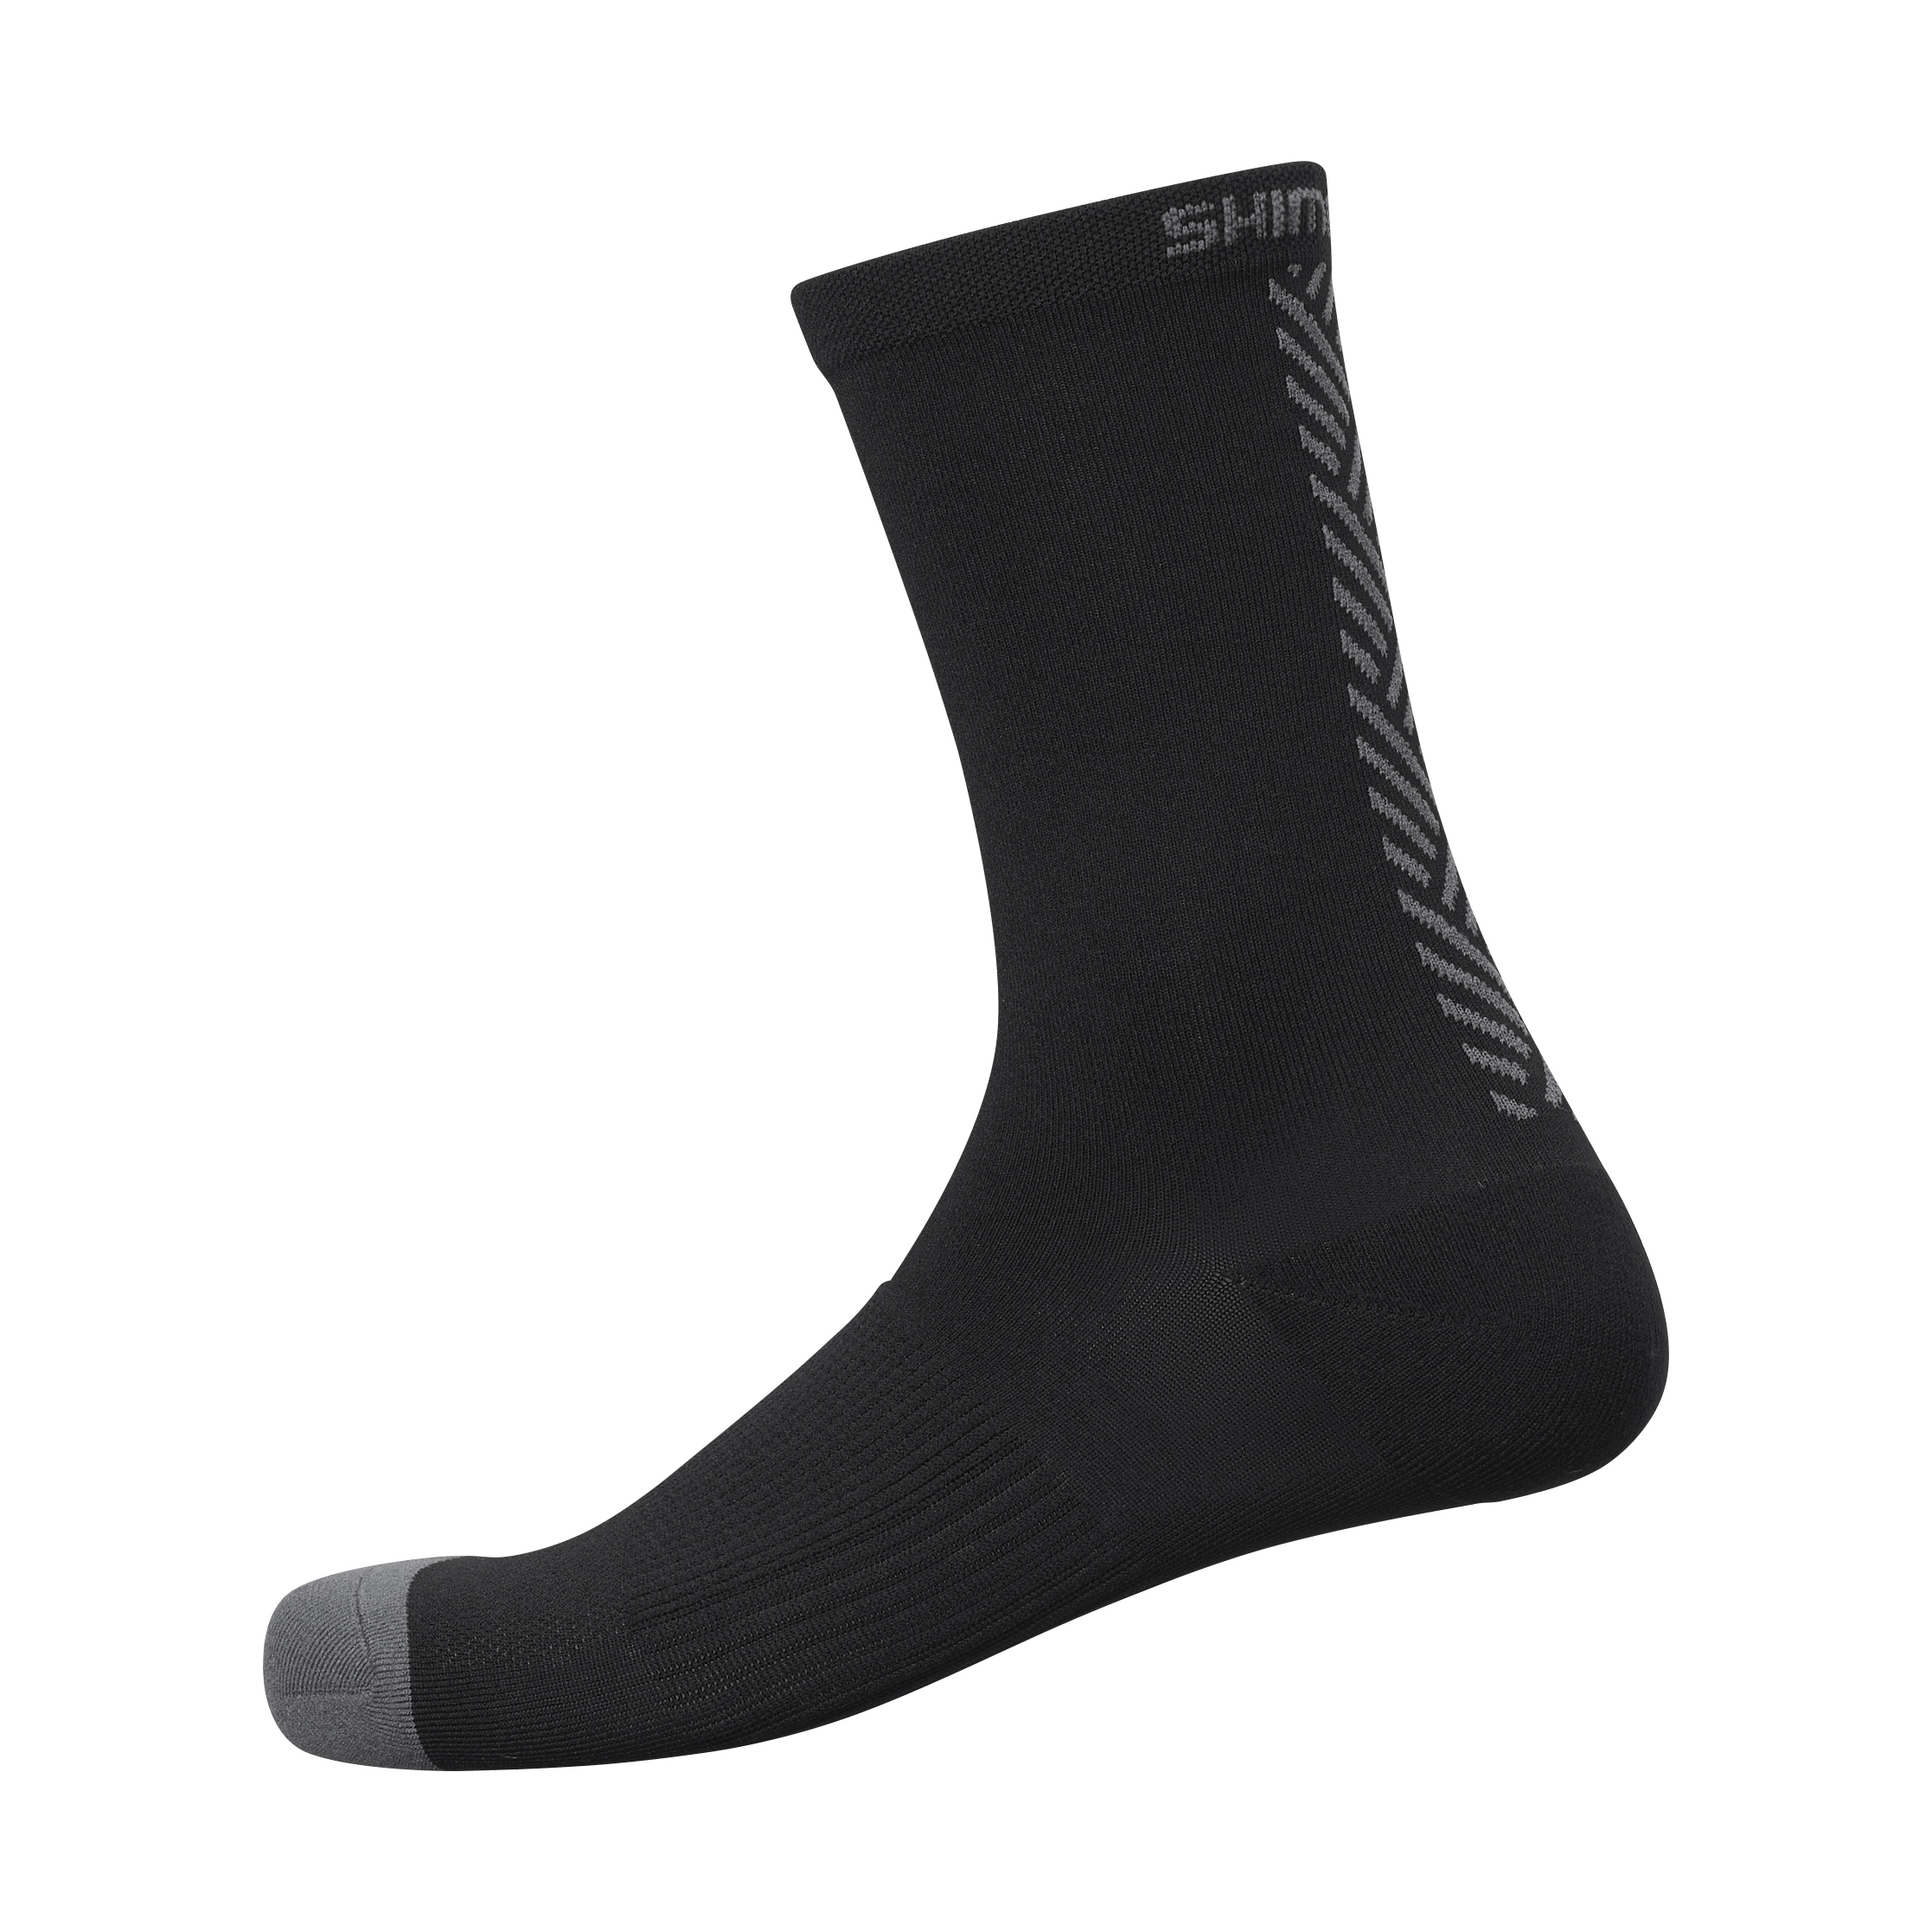 SHIMANO ORIGINAL TALL ponožky, black ajiro, 36-40